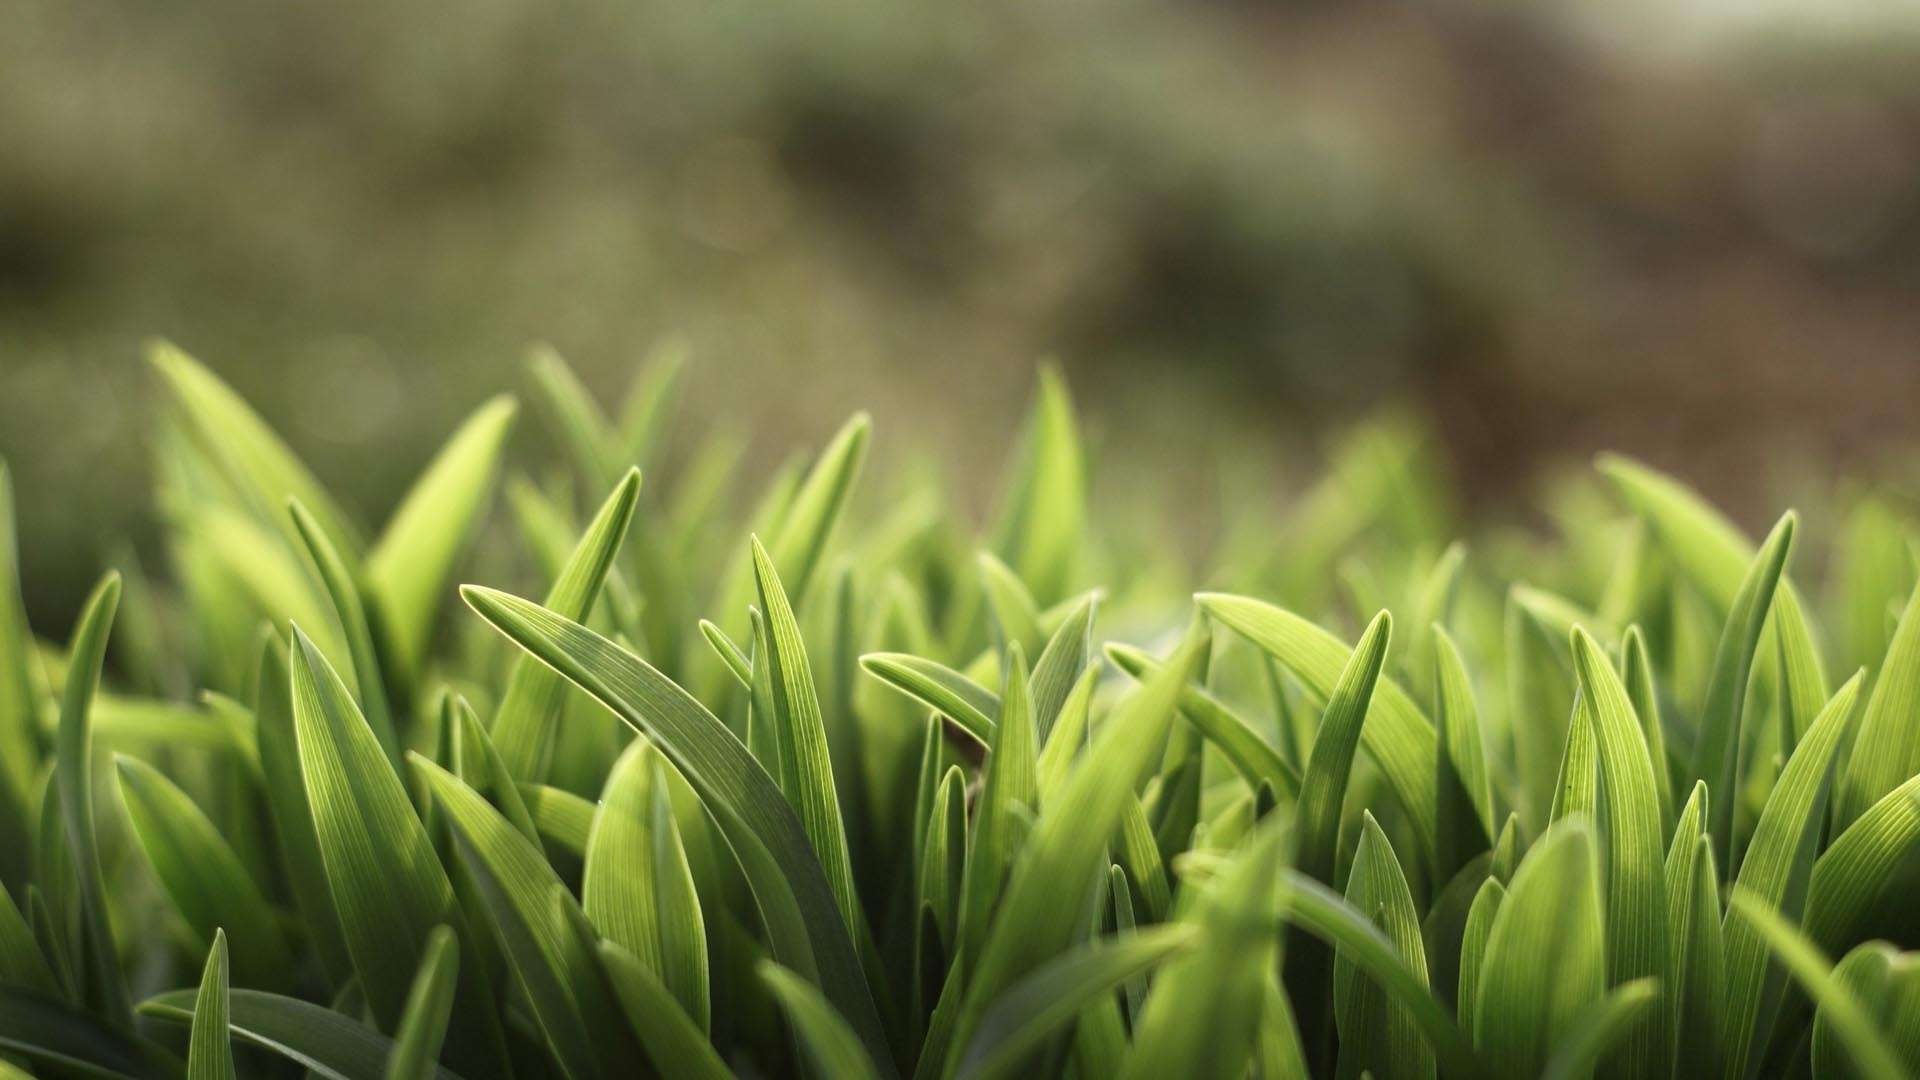 HD grass wallpapers, Lush greenery, Fresh spring, Vibrant foliage, 1920x1080 Full HD Desktop